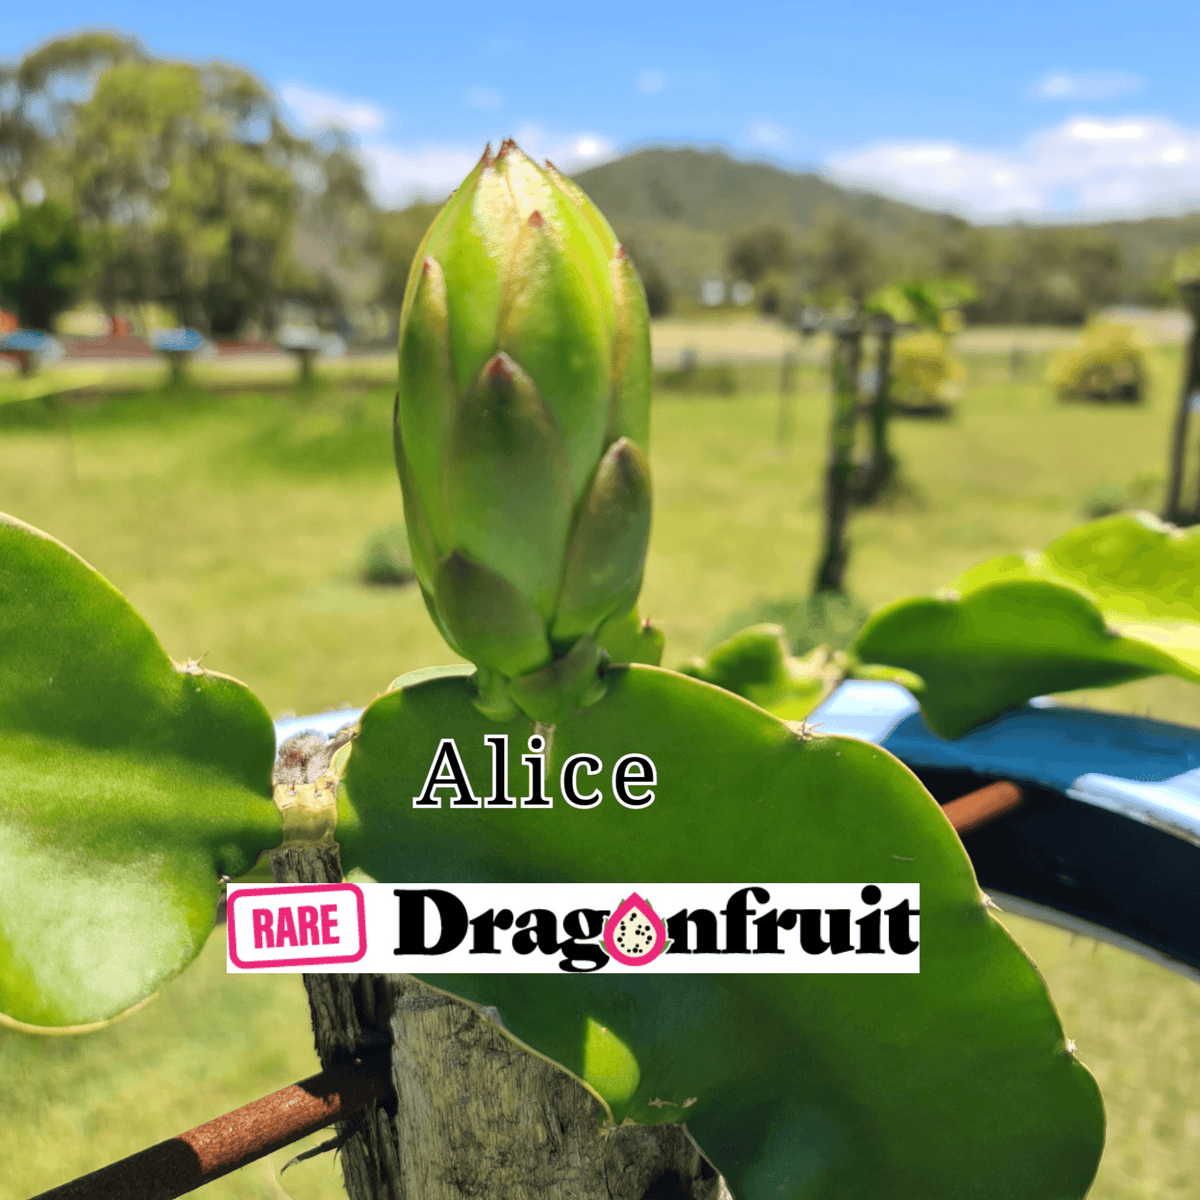 Alice (XL bloom)-Hylocereus undatus hybrid Californian Dragon Fruit - Rare Dragon Fruit